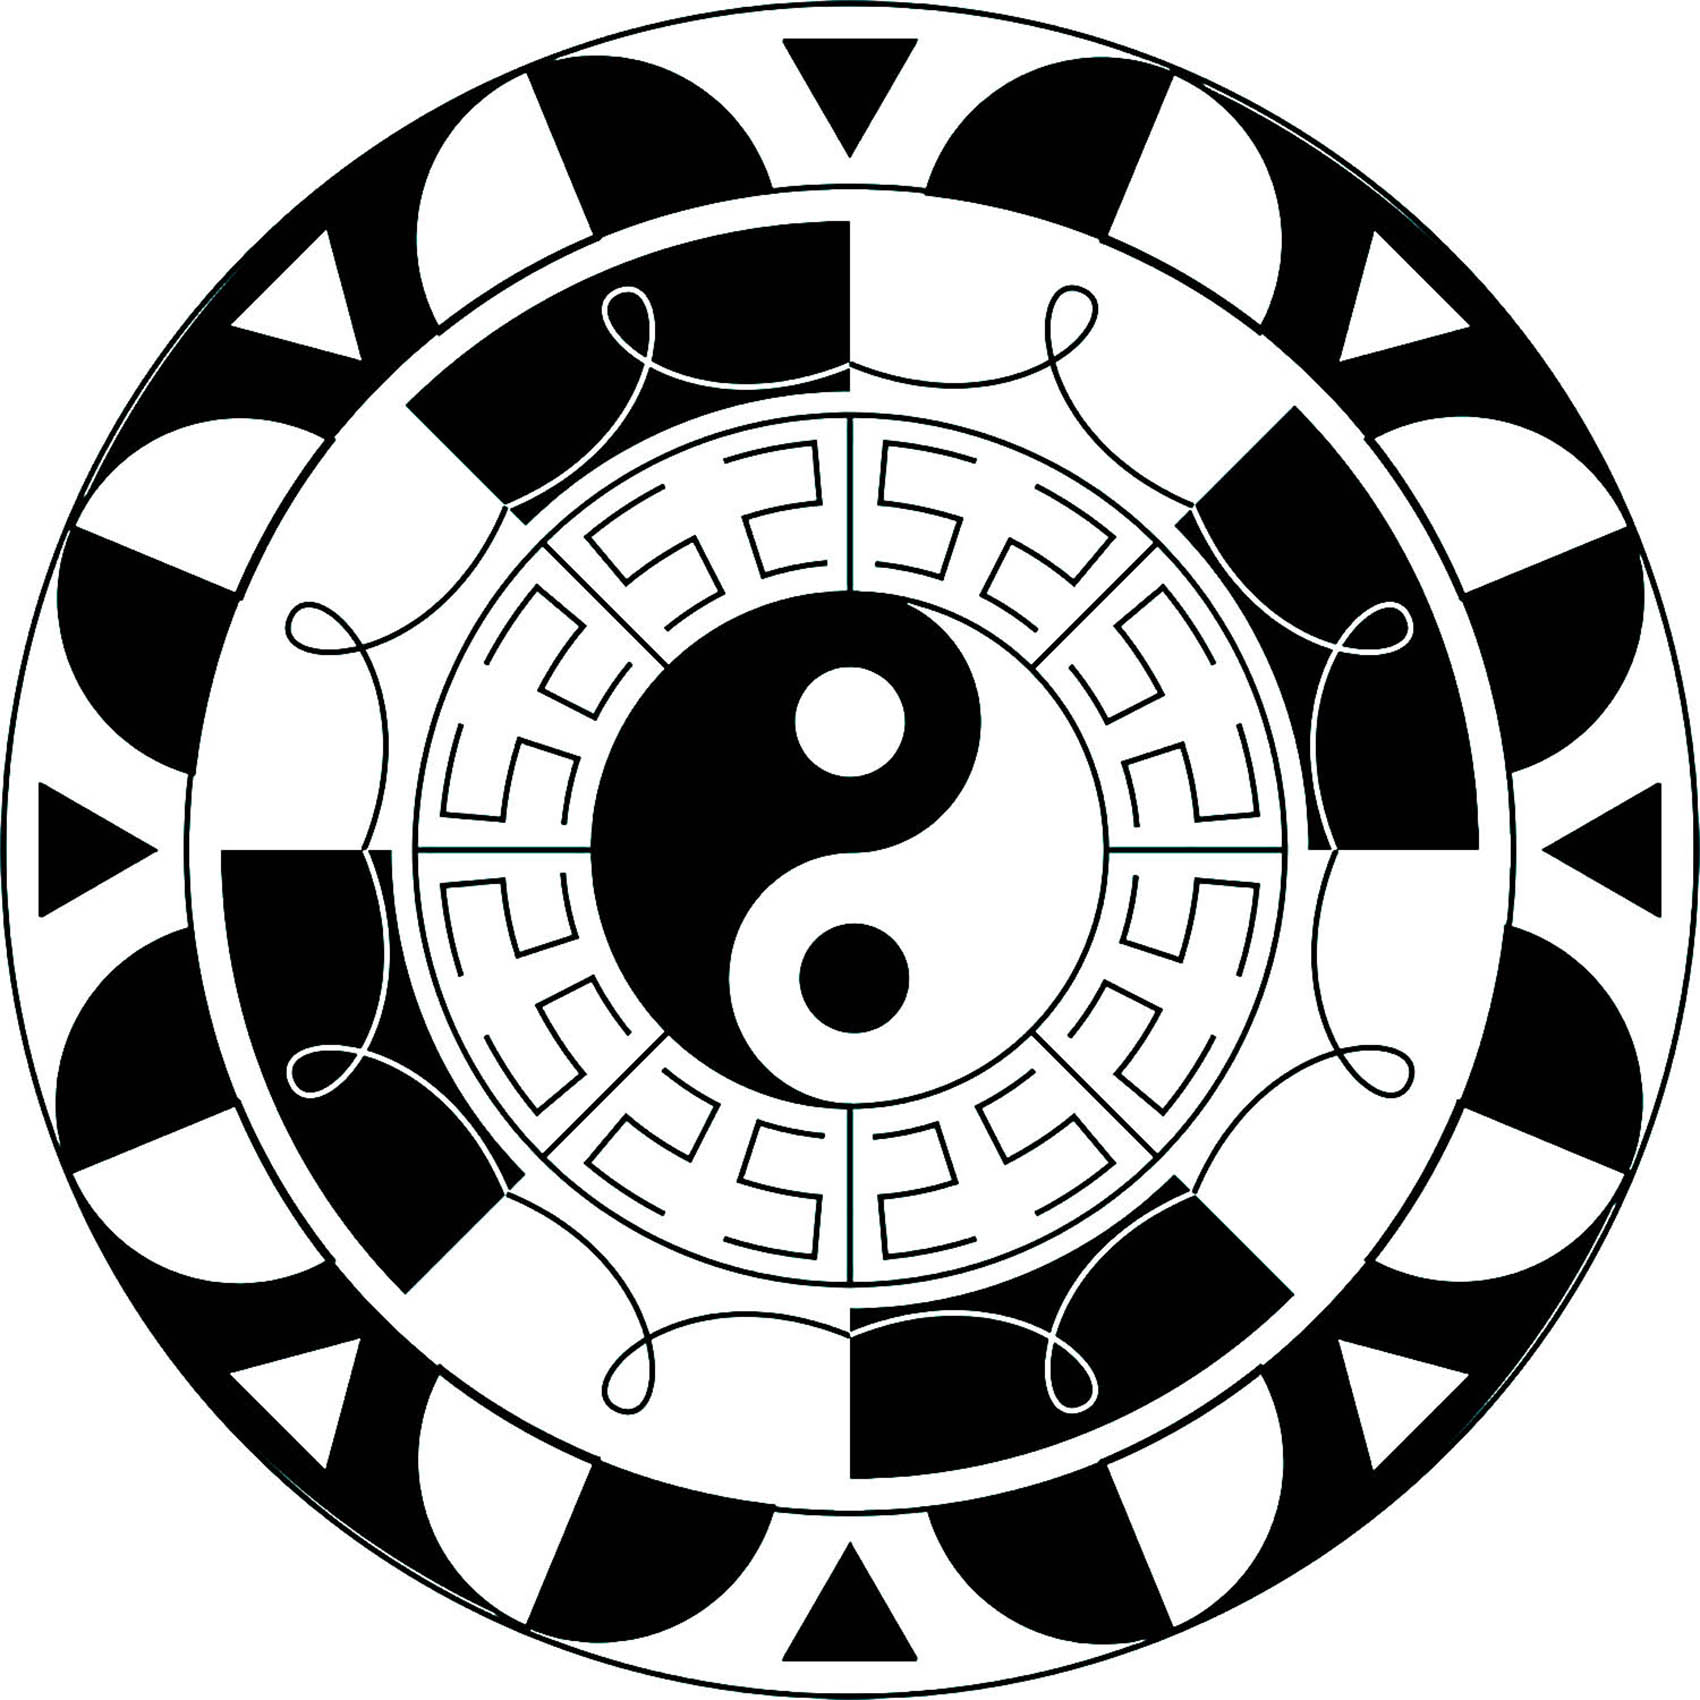 O famoso símbolo Yin & Yang integrado num belo Mandala a preto e branco